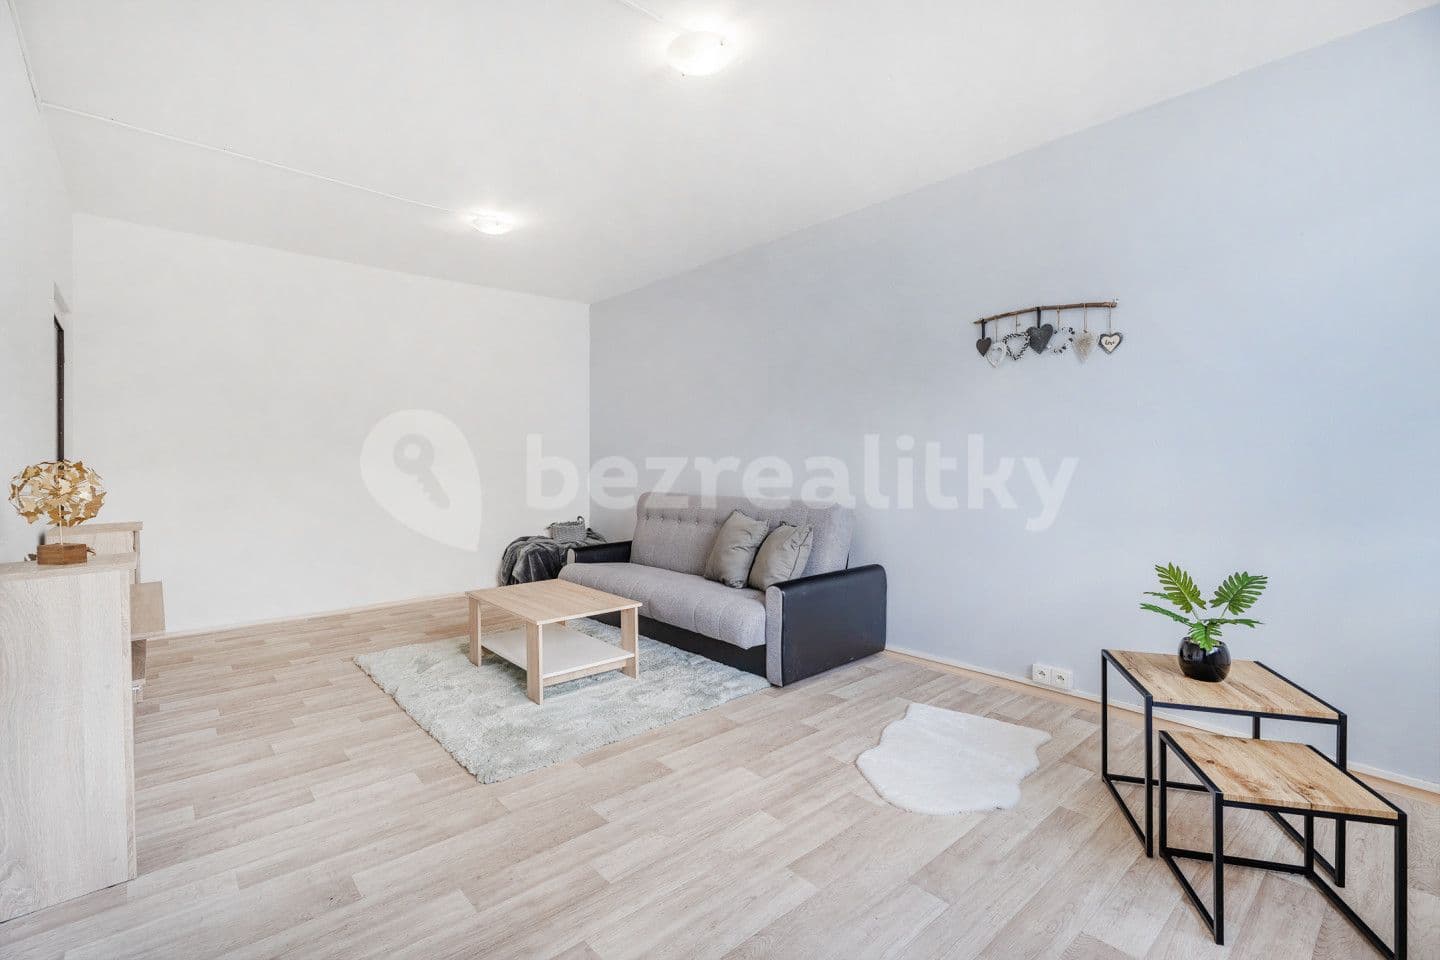 2 bedroom flat for sale, 61 m², Zákoutí, Chlumec, Ústecký Region